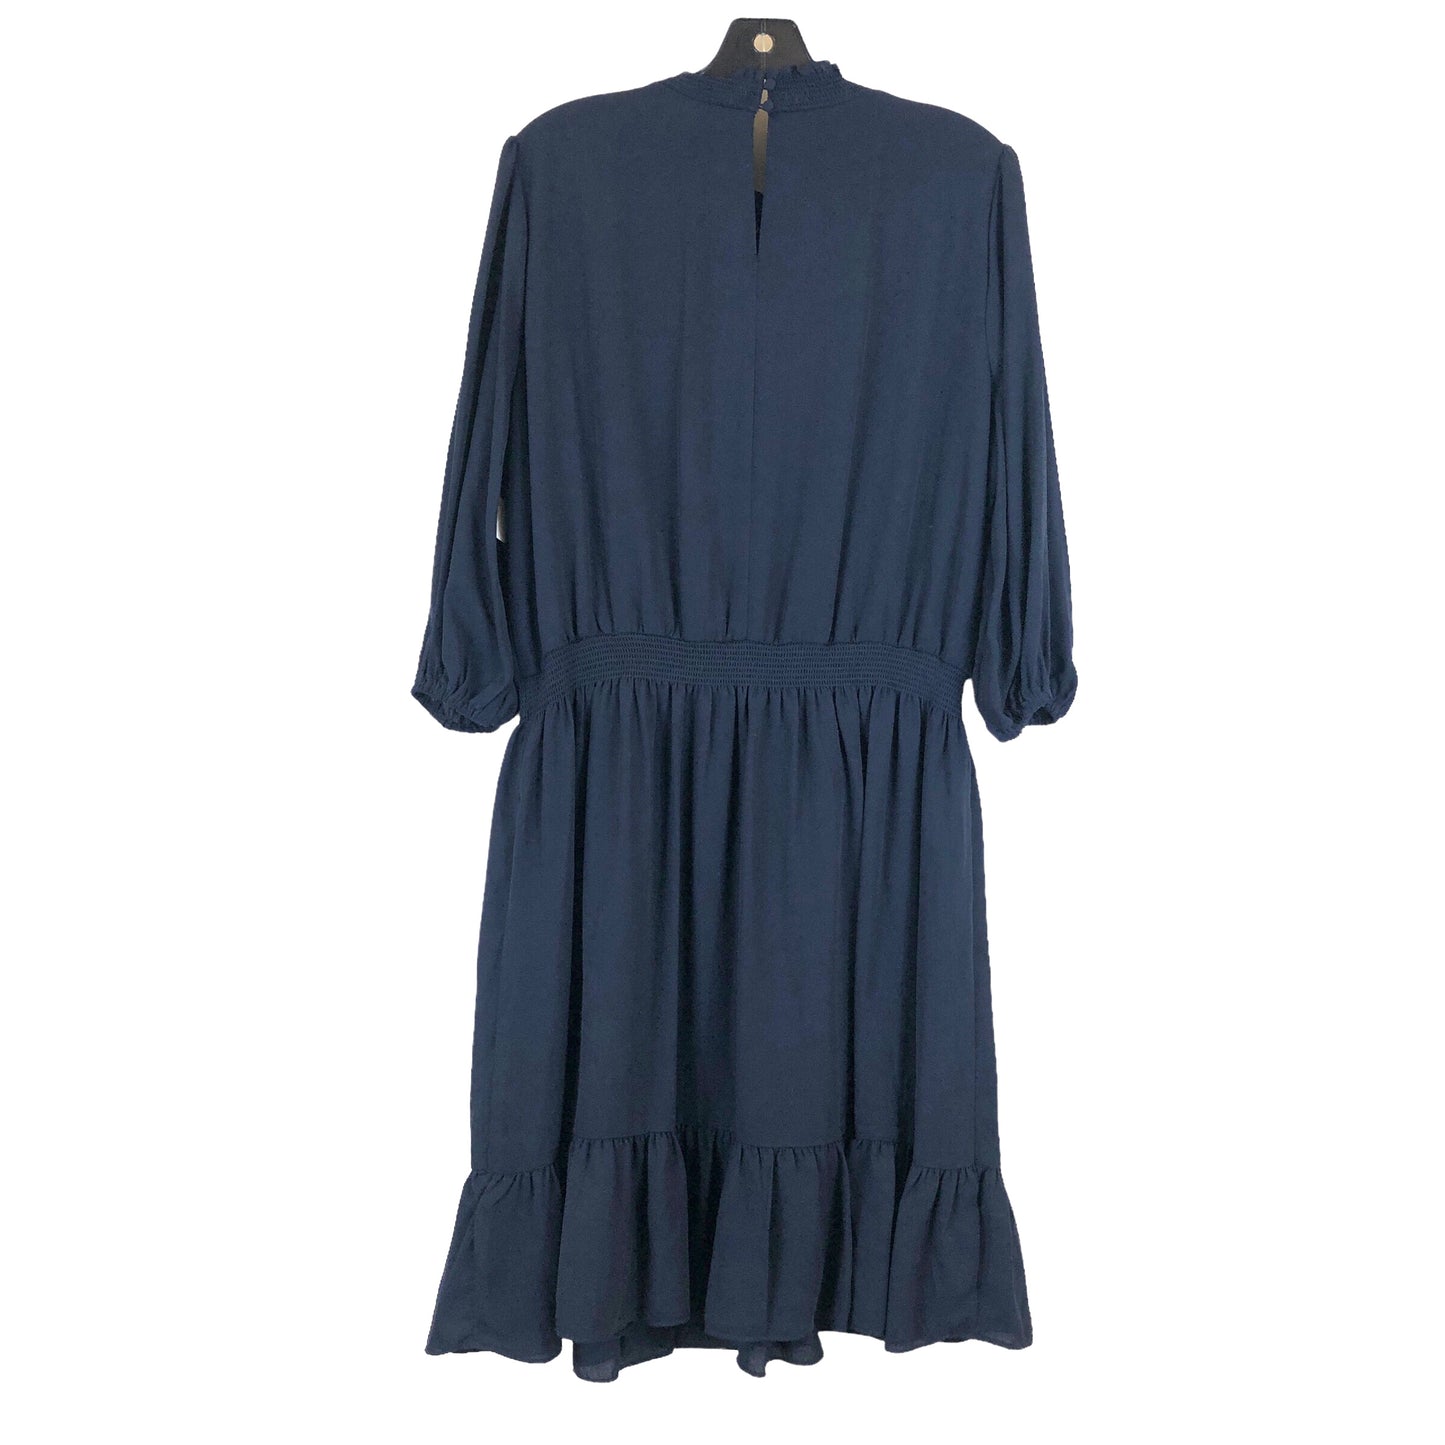 Dress Casual Short By Nanette By Nanette Lepore  Size: Xl